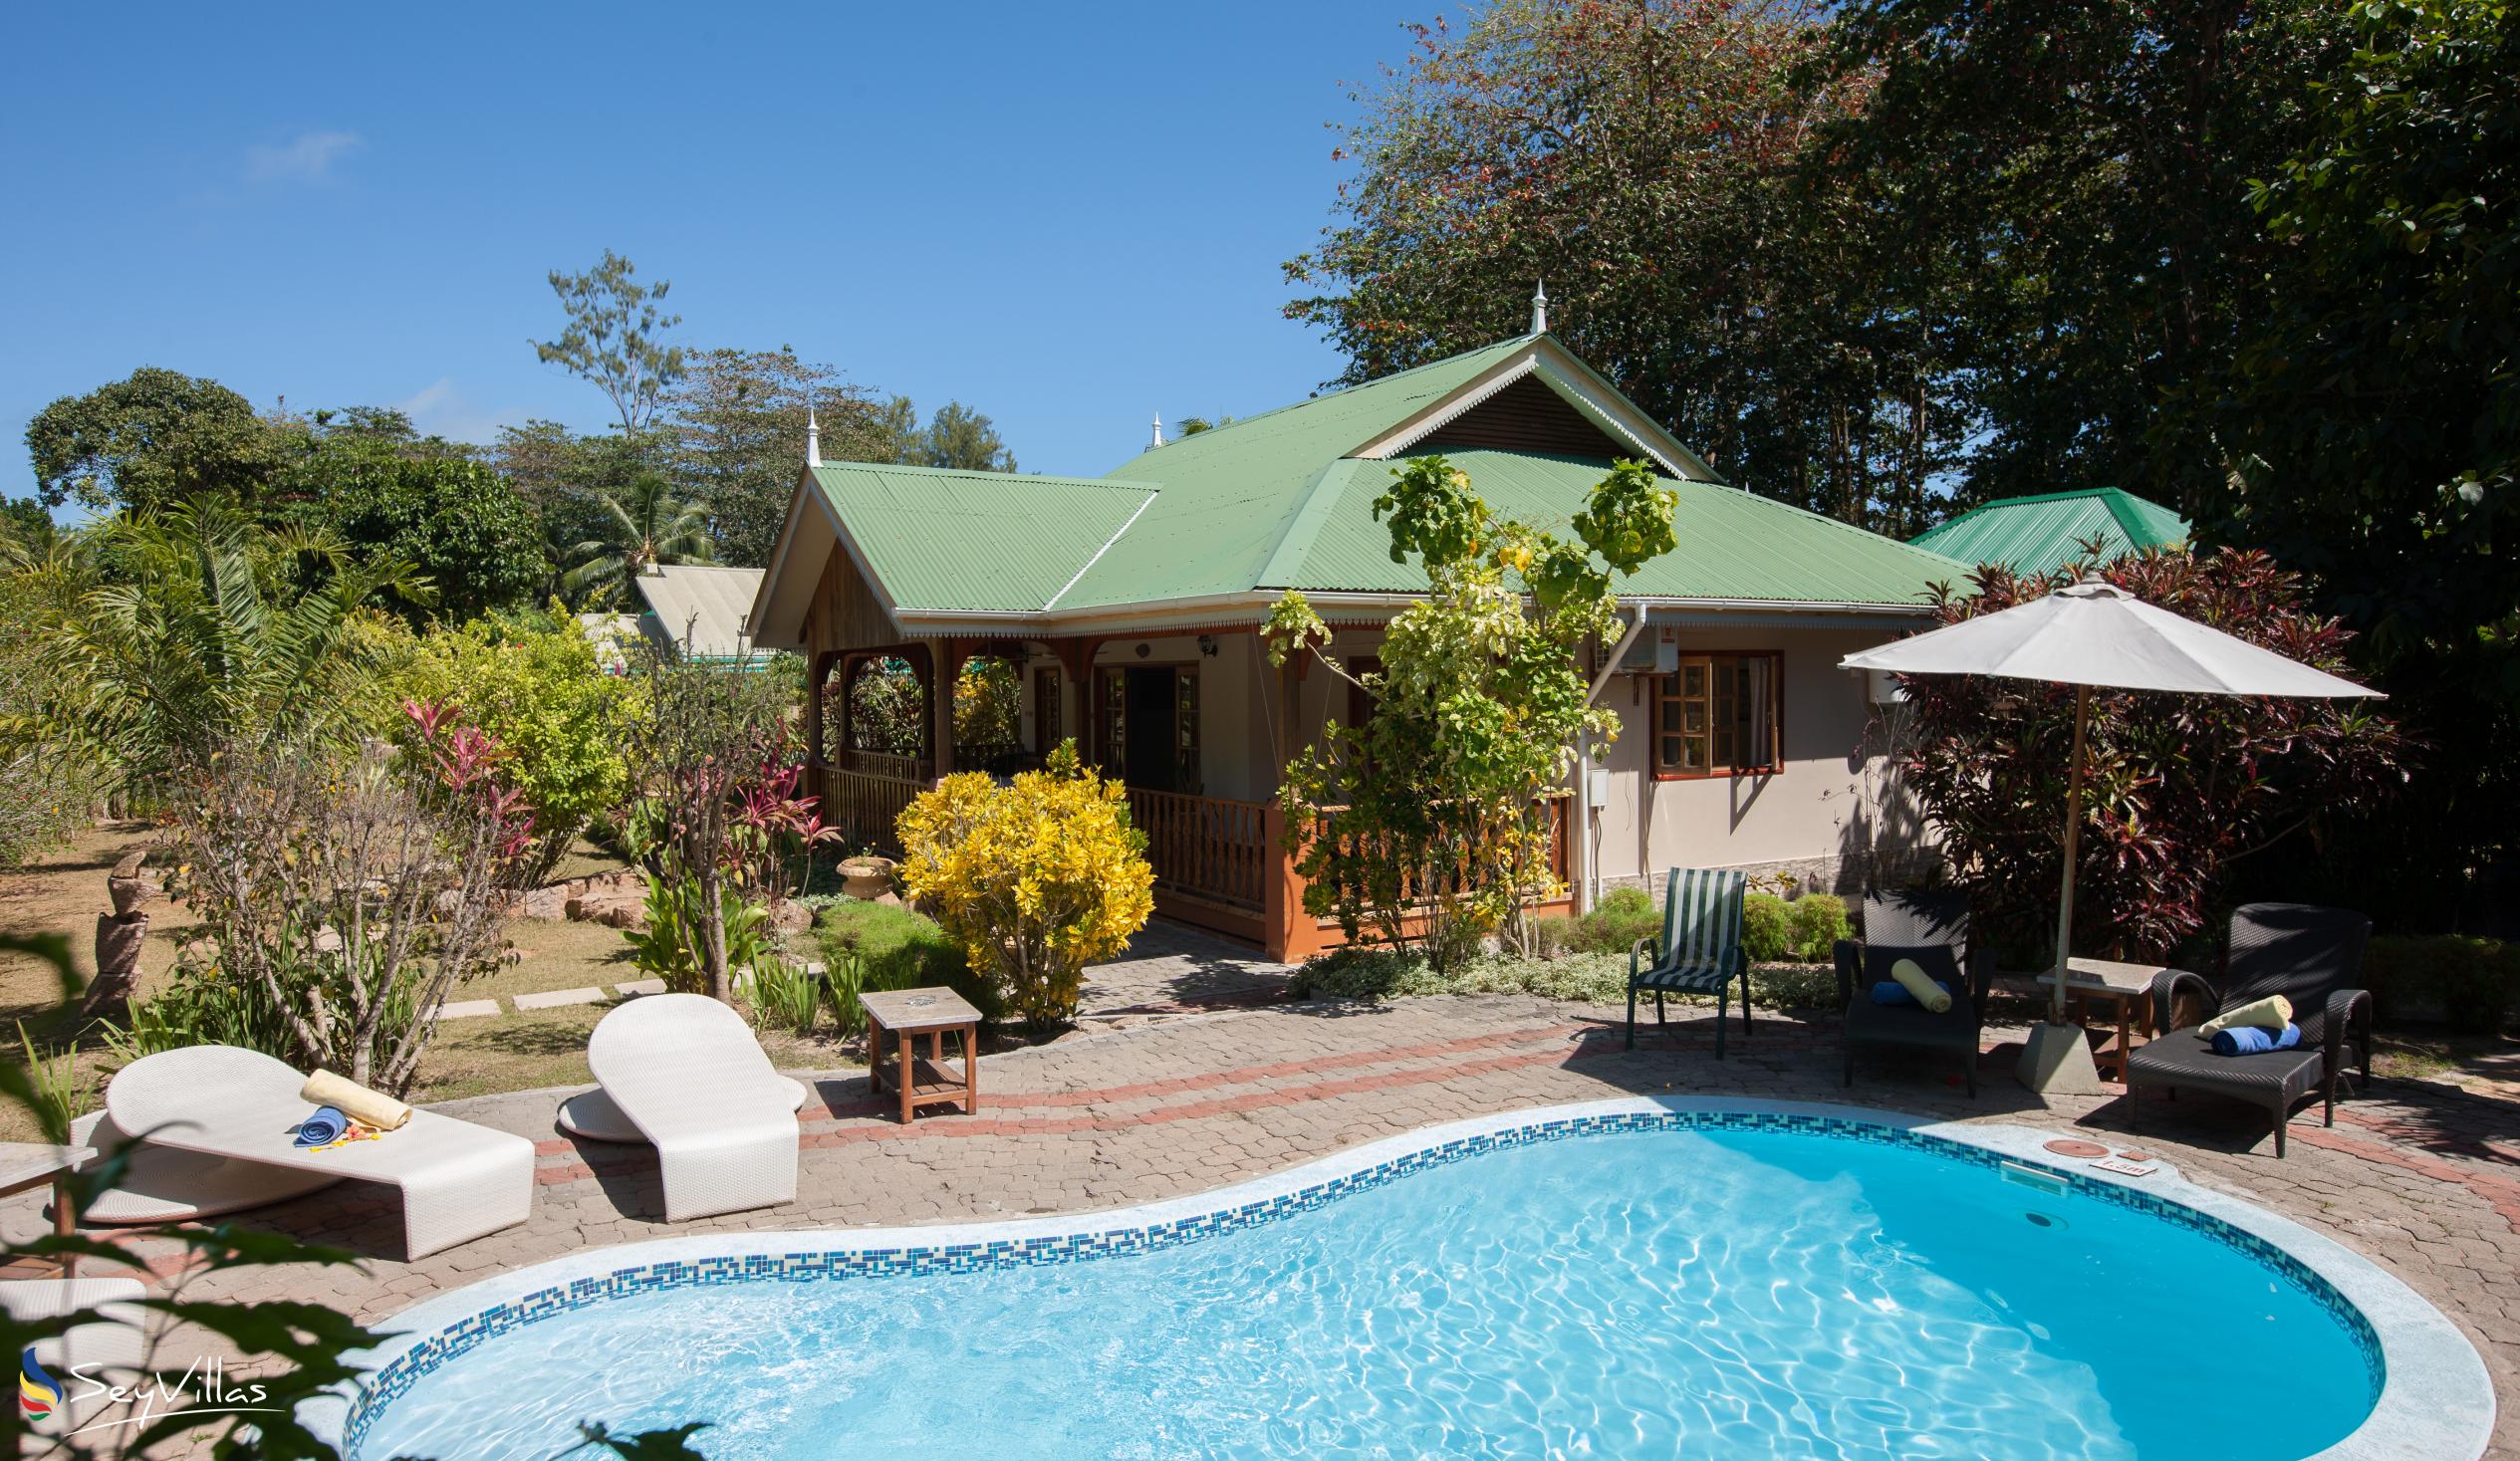 Foto 6: Casa de Leela - Aussenbereich - La Digue (Seychellen)